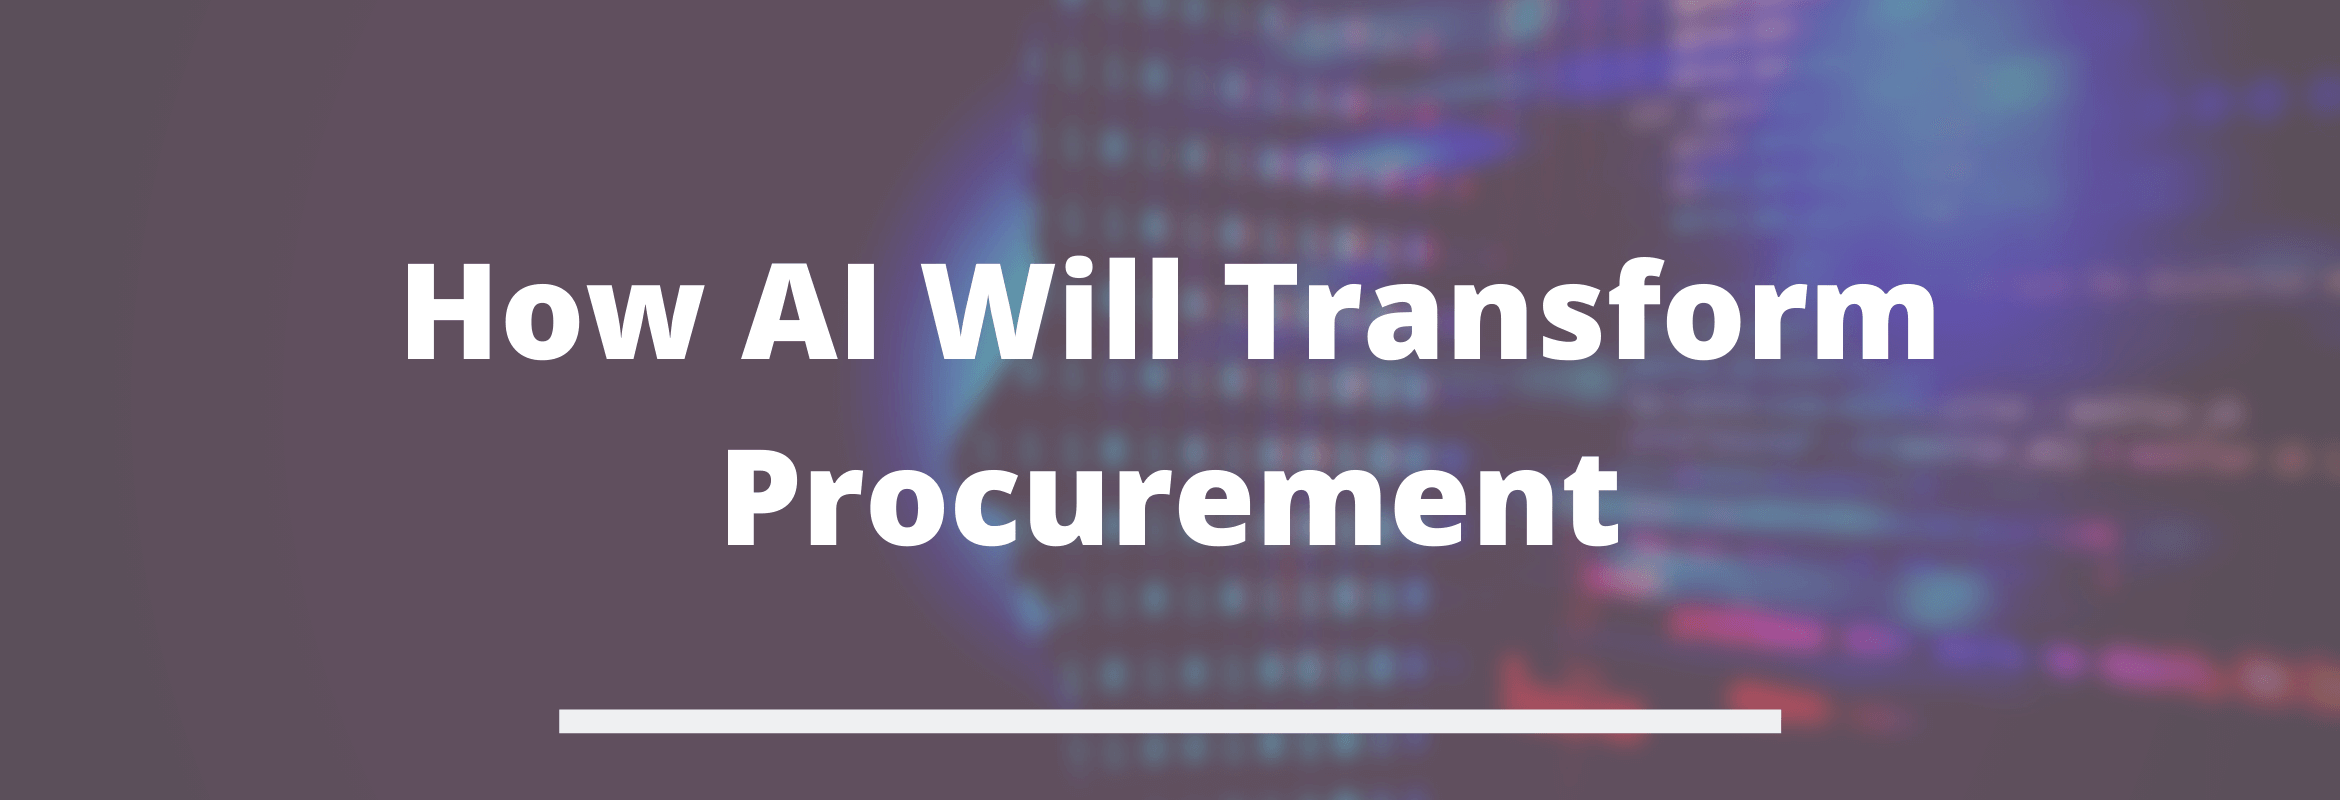 procurement transformation with ai